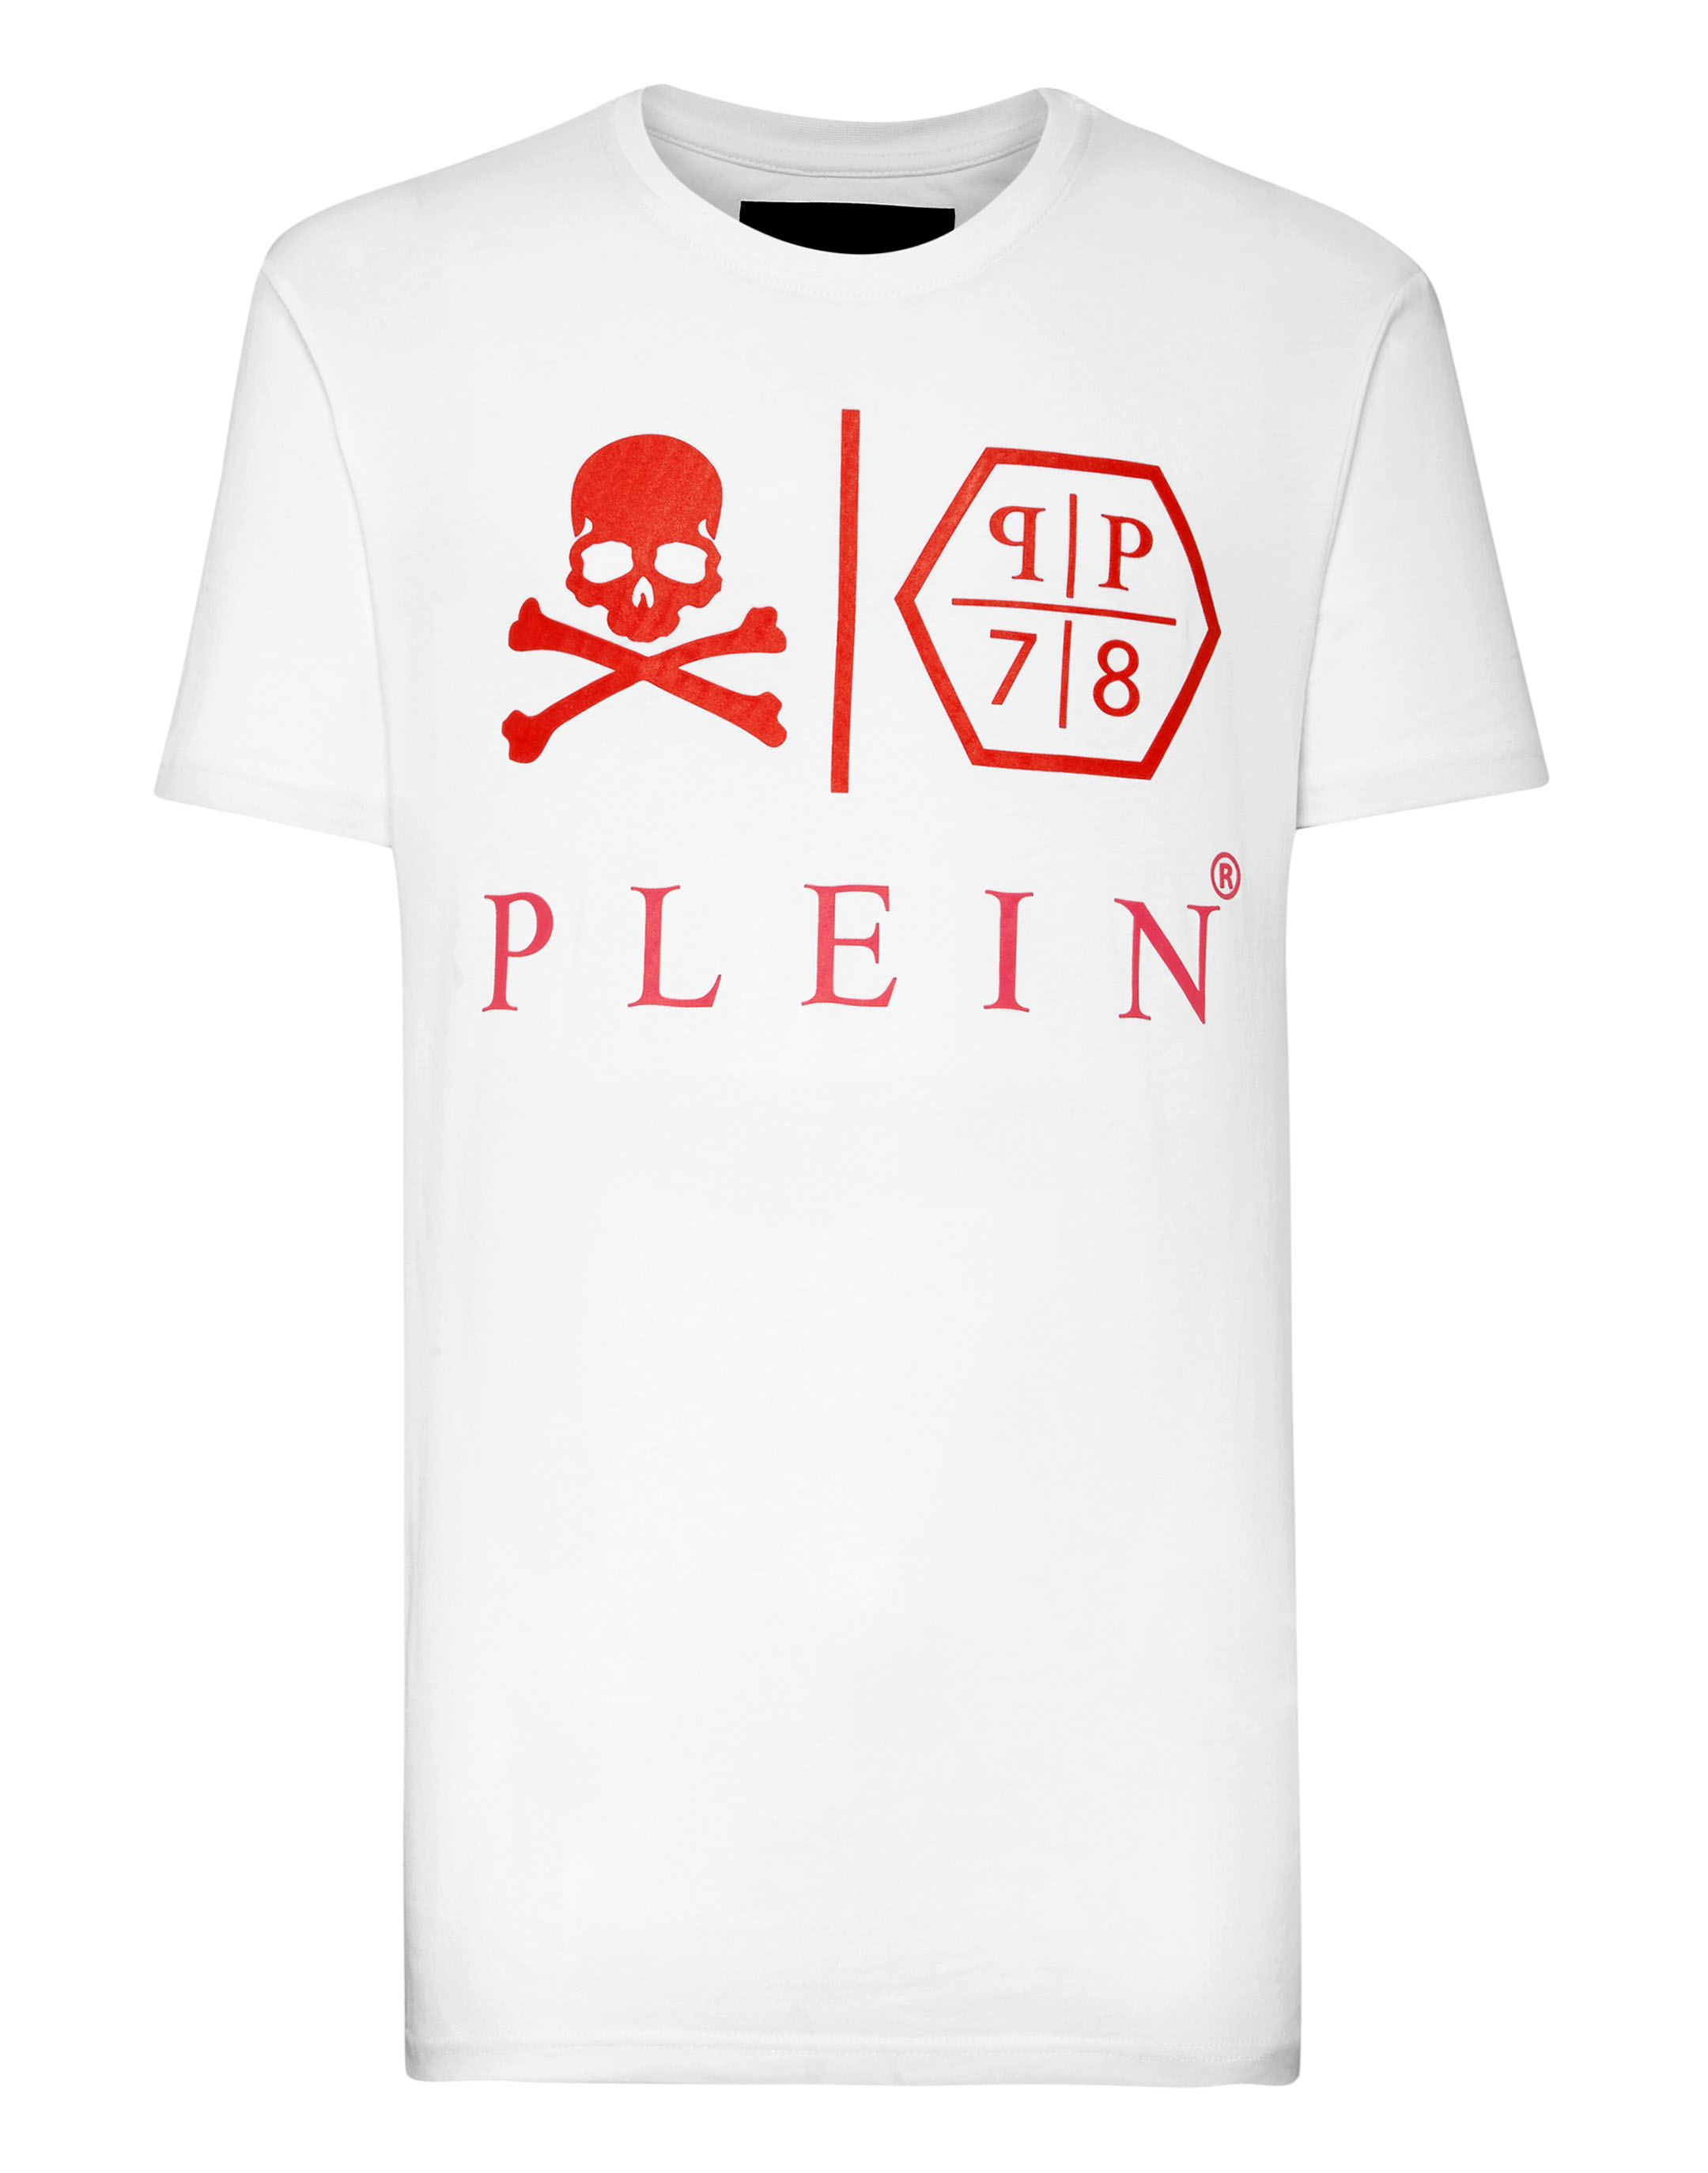 Philipp Plein logo, Vector Logo of Philipp Plein brand free download (eps,  ai, png, cdr) formats